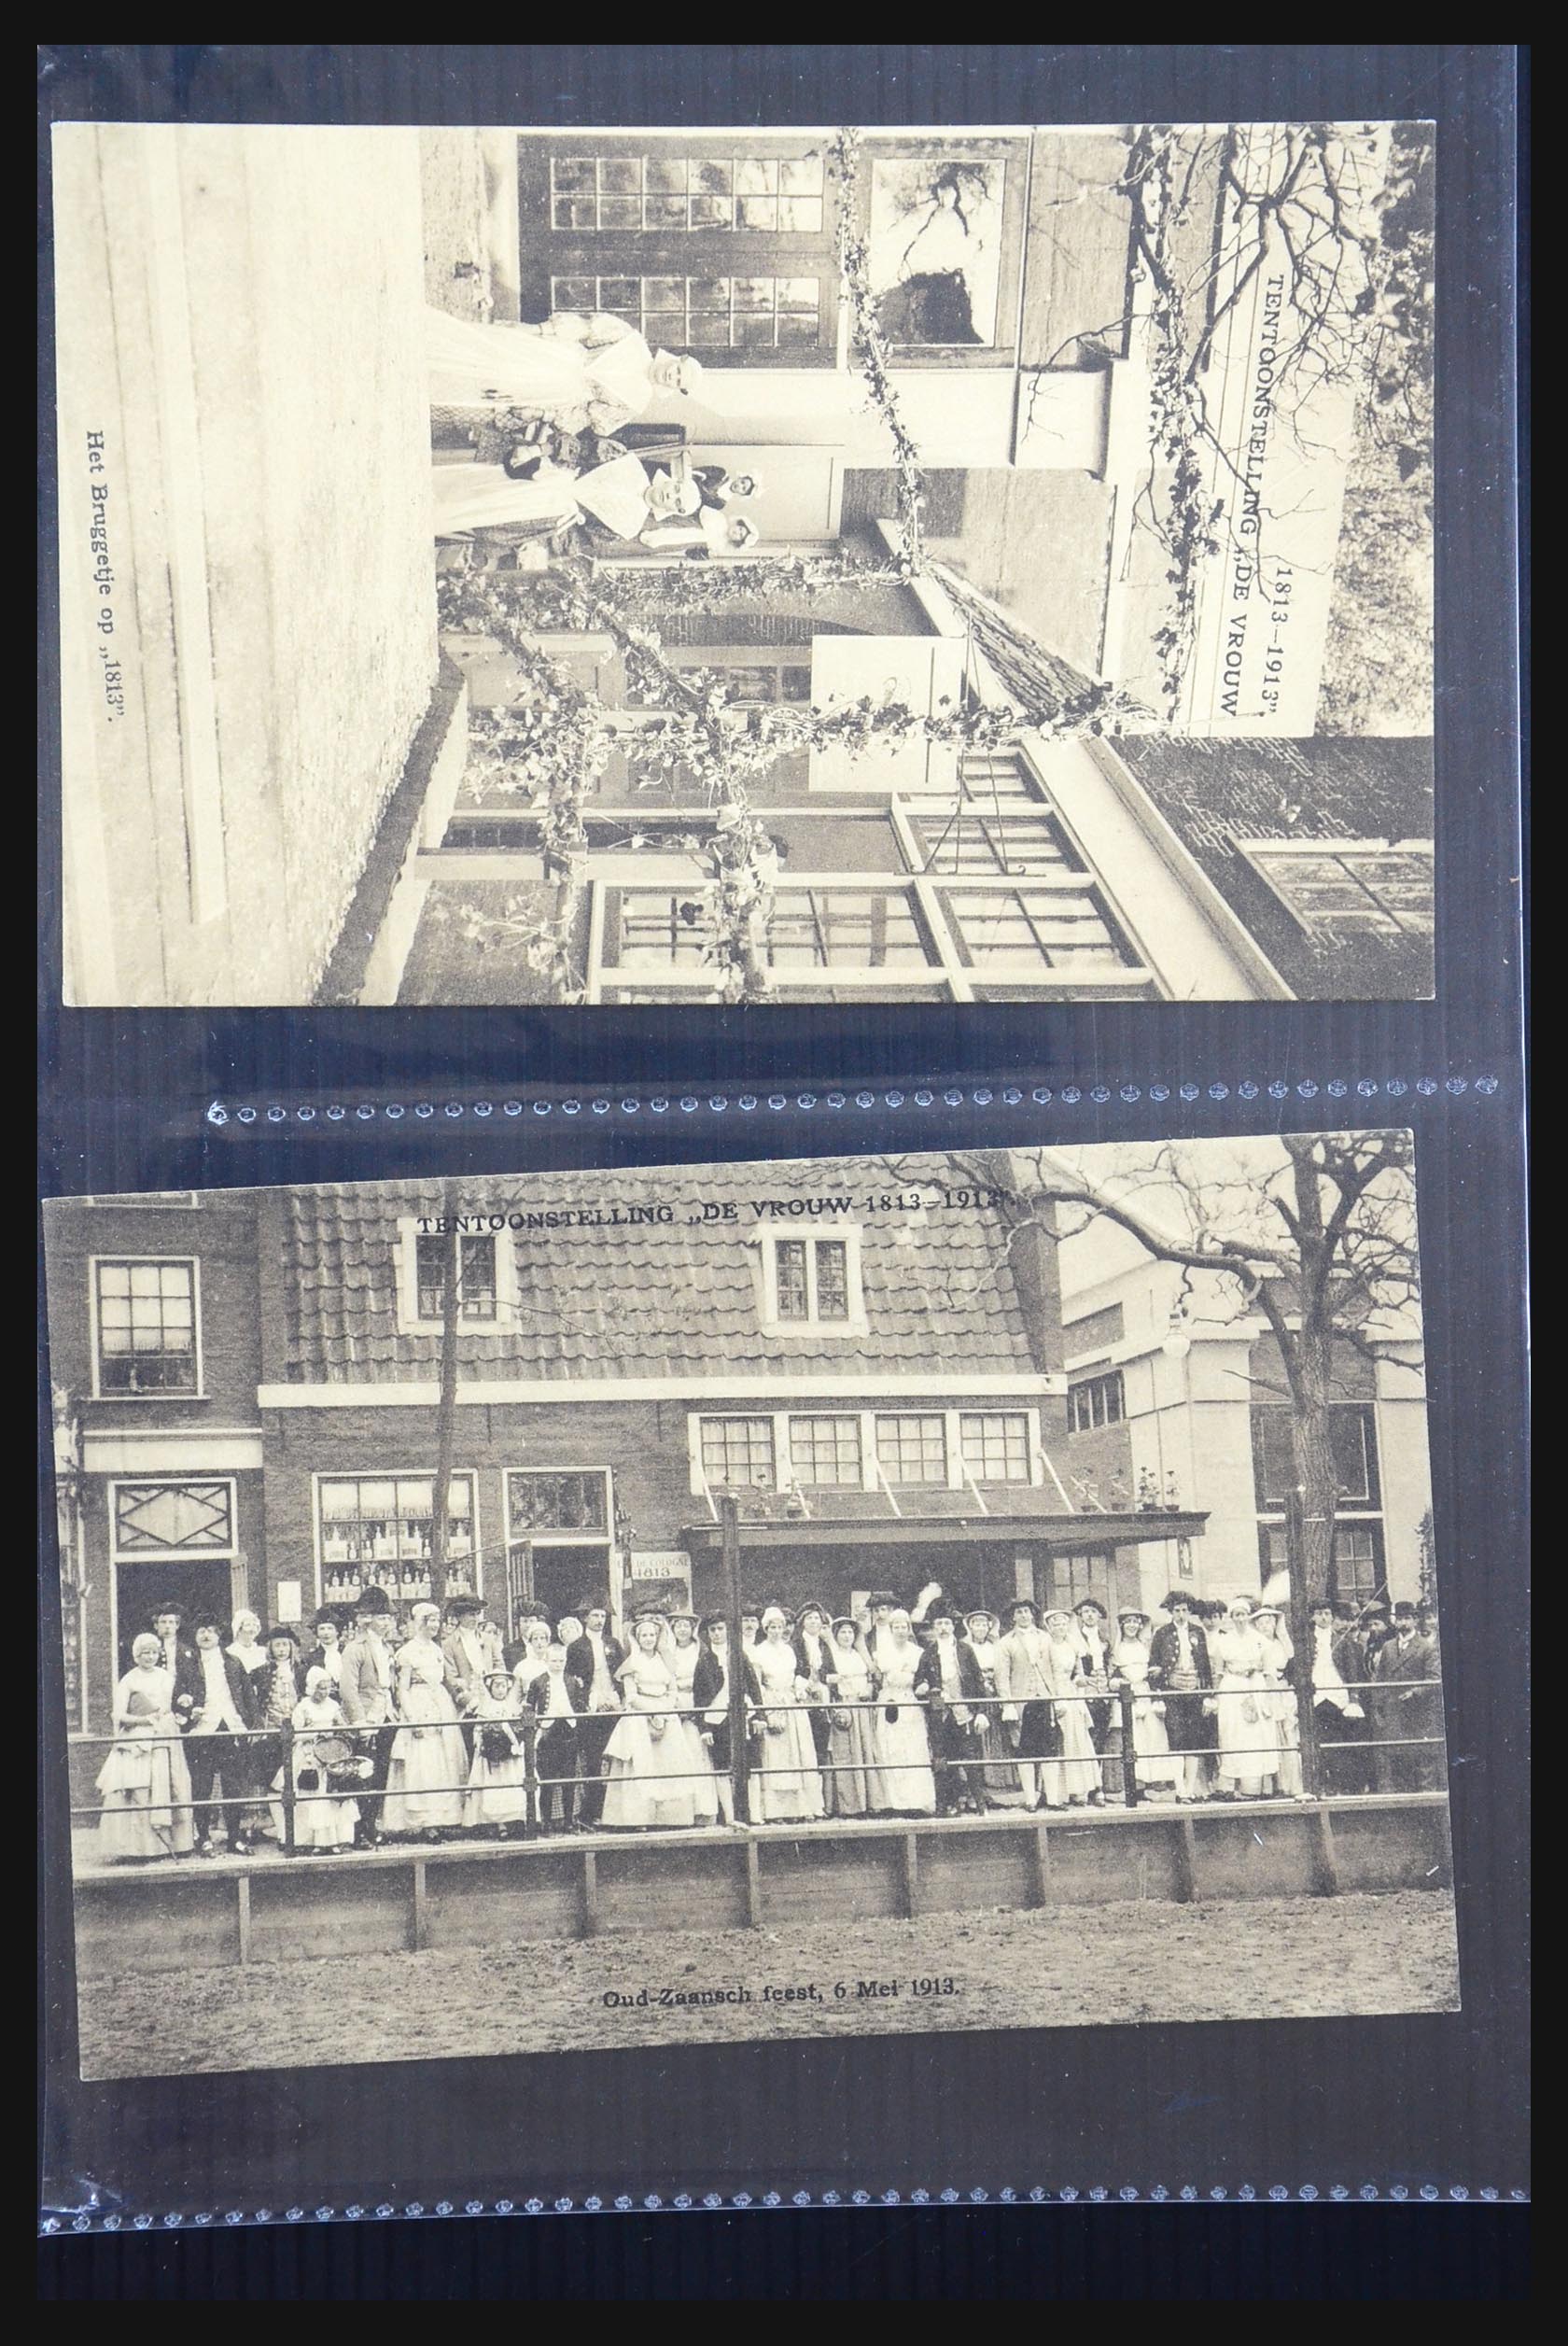 31338 439 - 31338 Netherlands picture postcards 1897-1914.